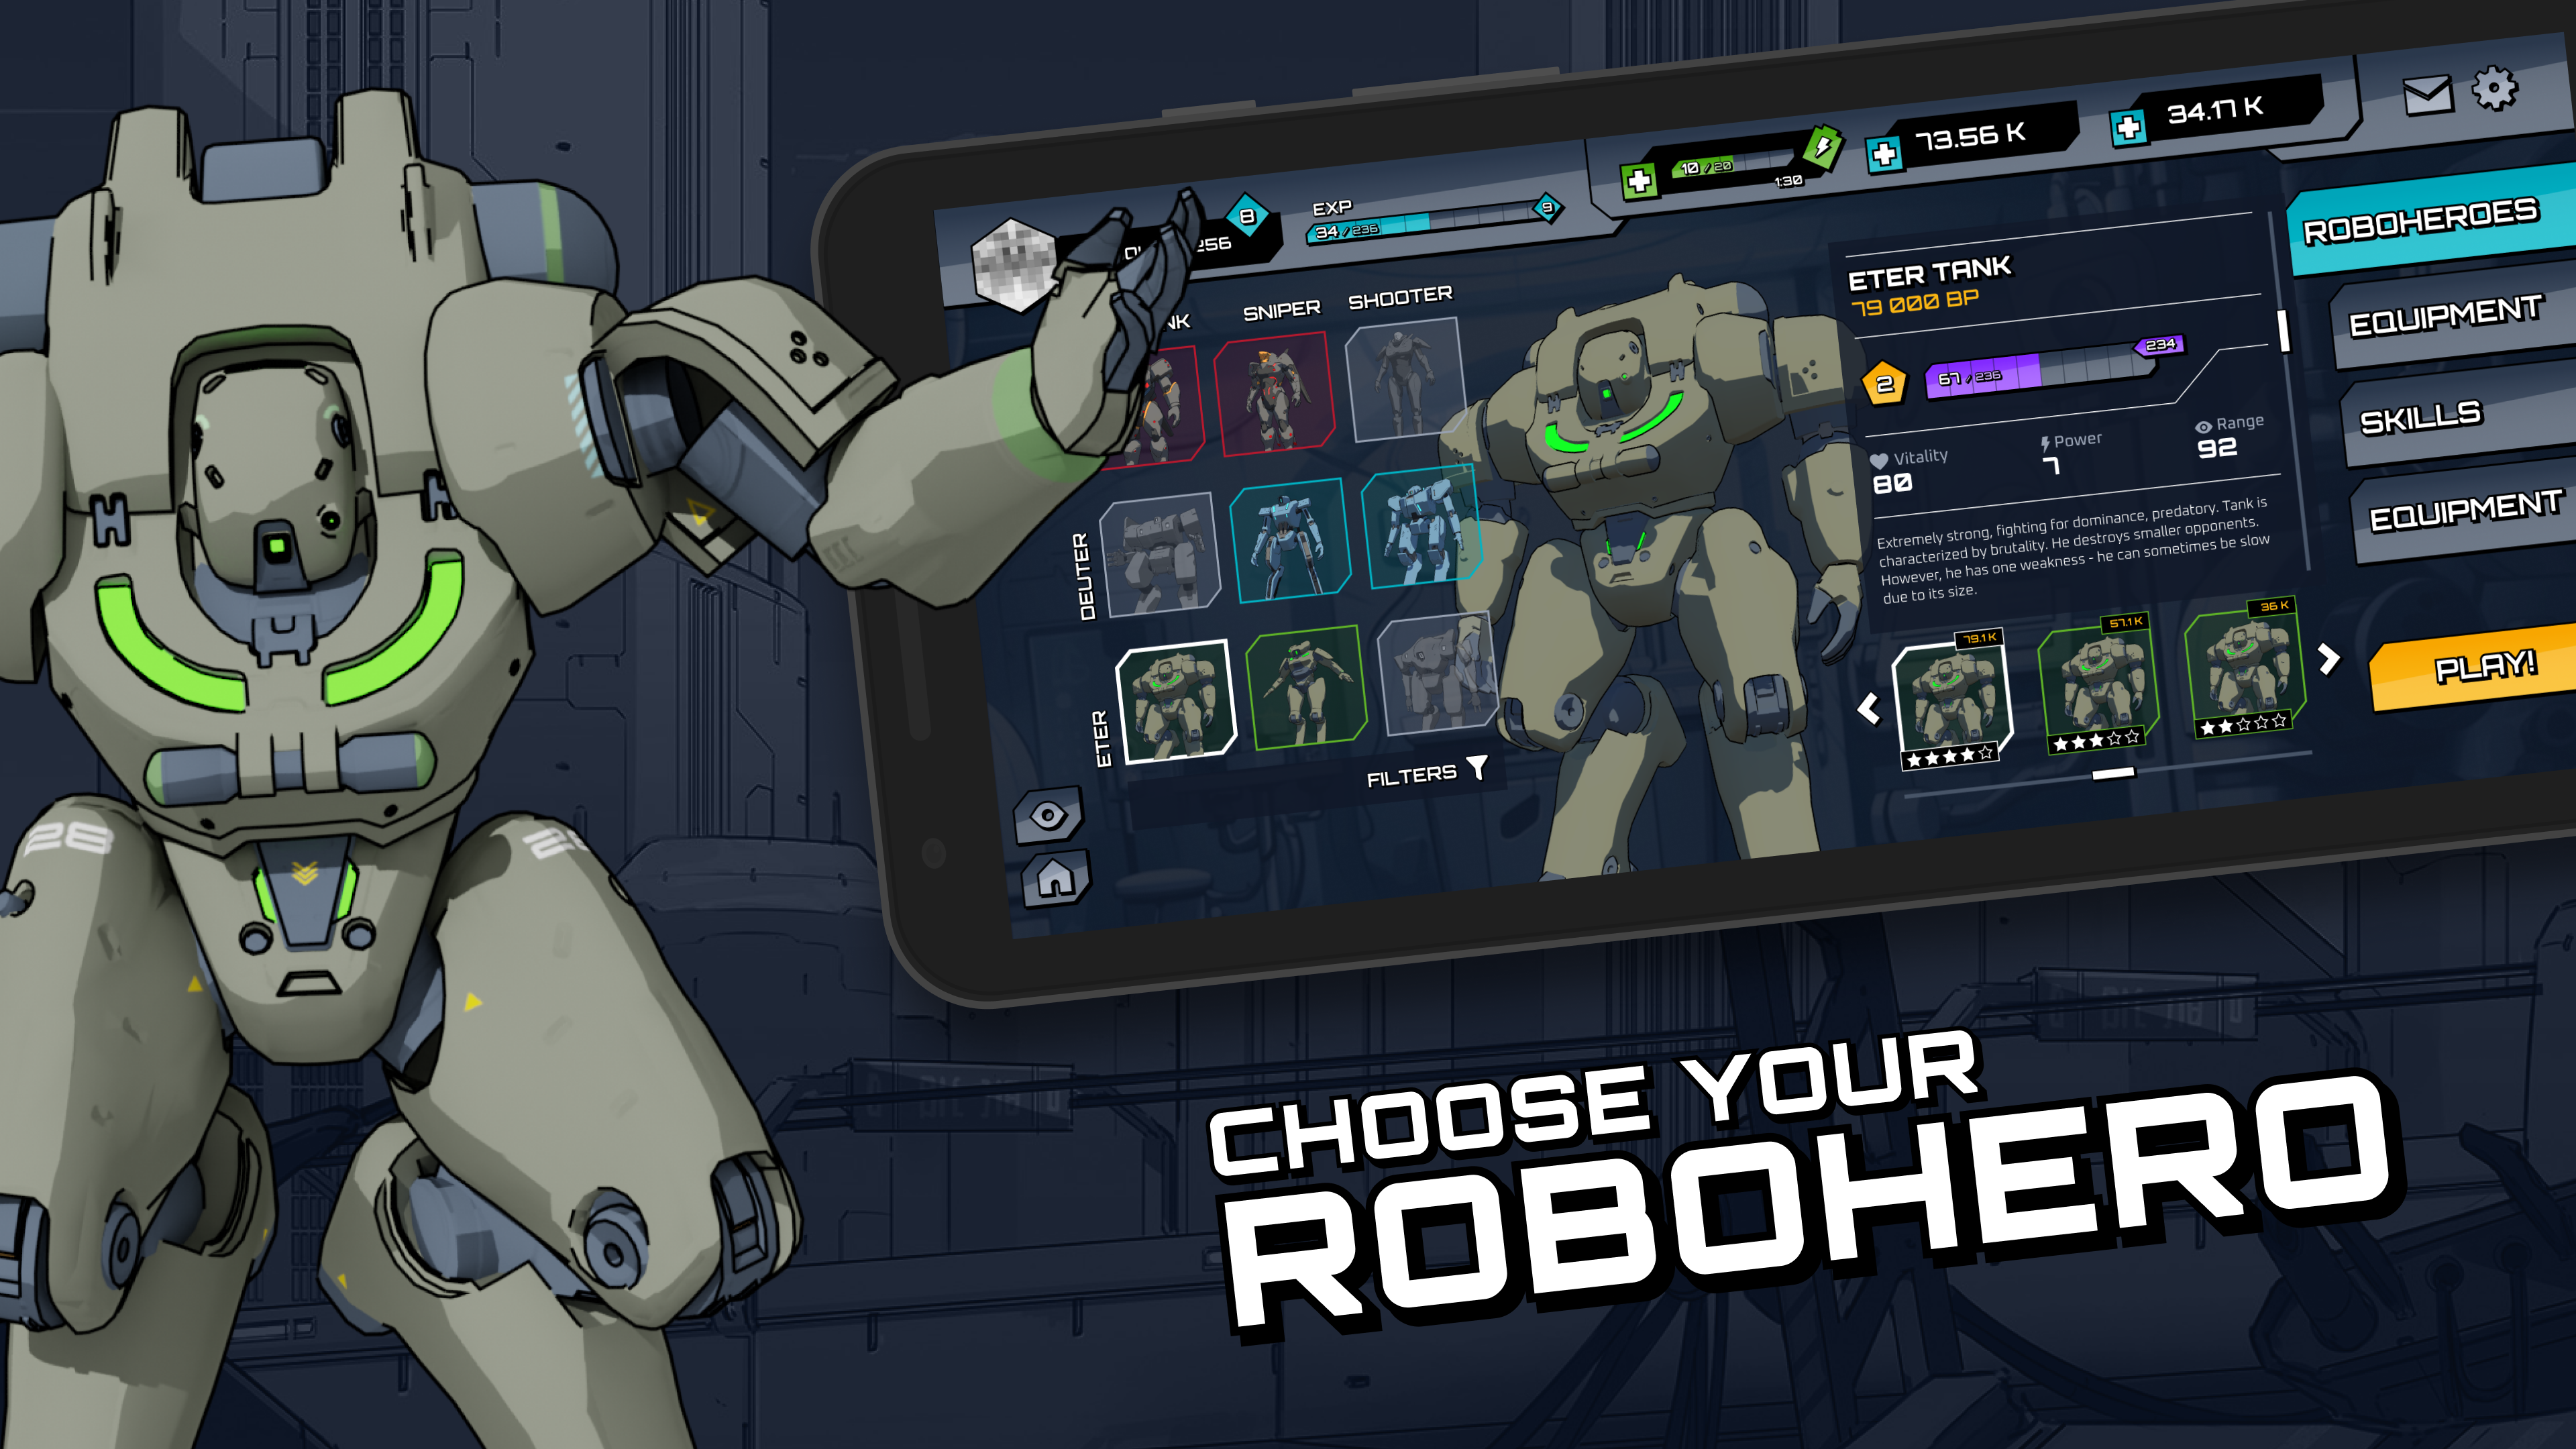 Screenshot 1 of RoboHero Mobile - Open Beta 2.0.6